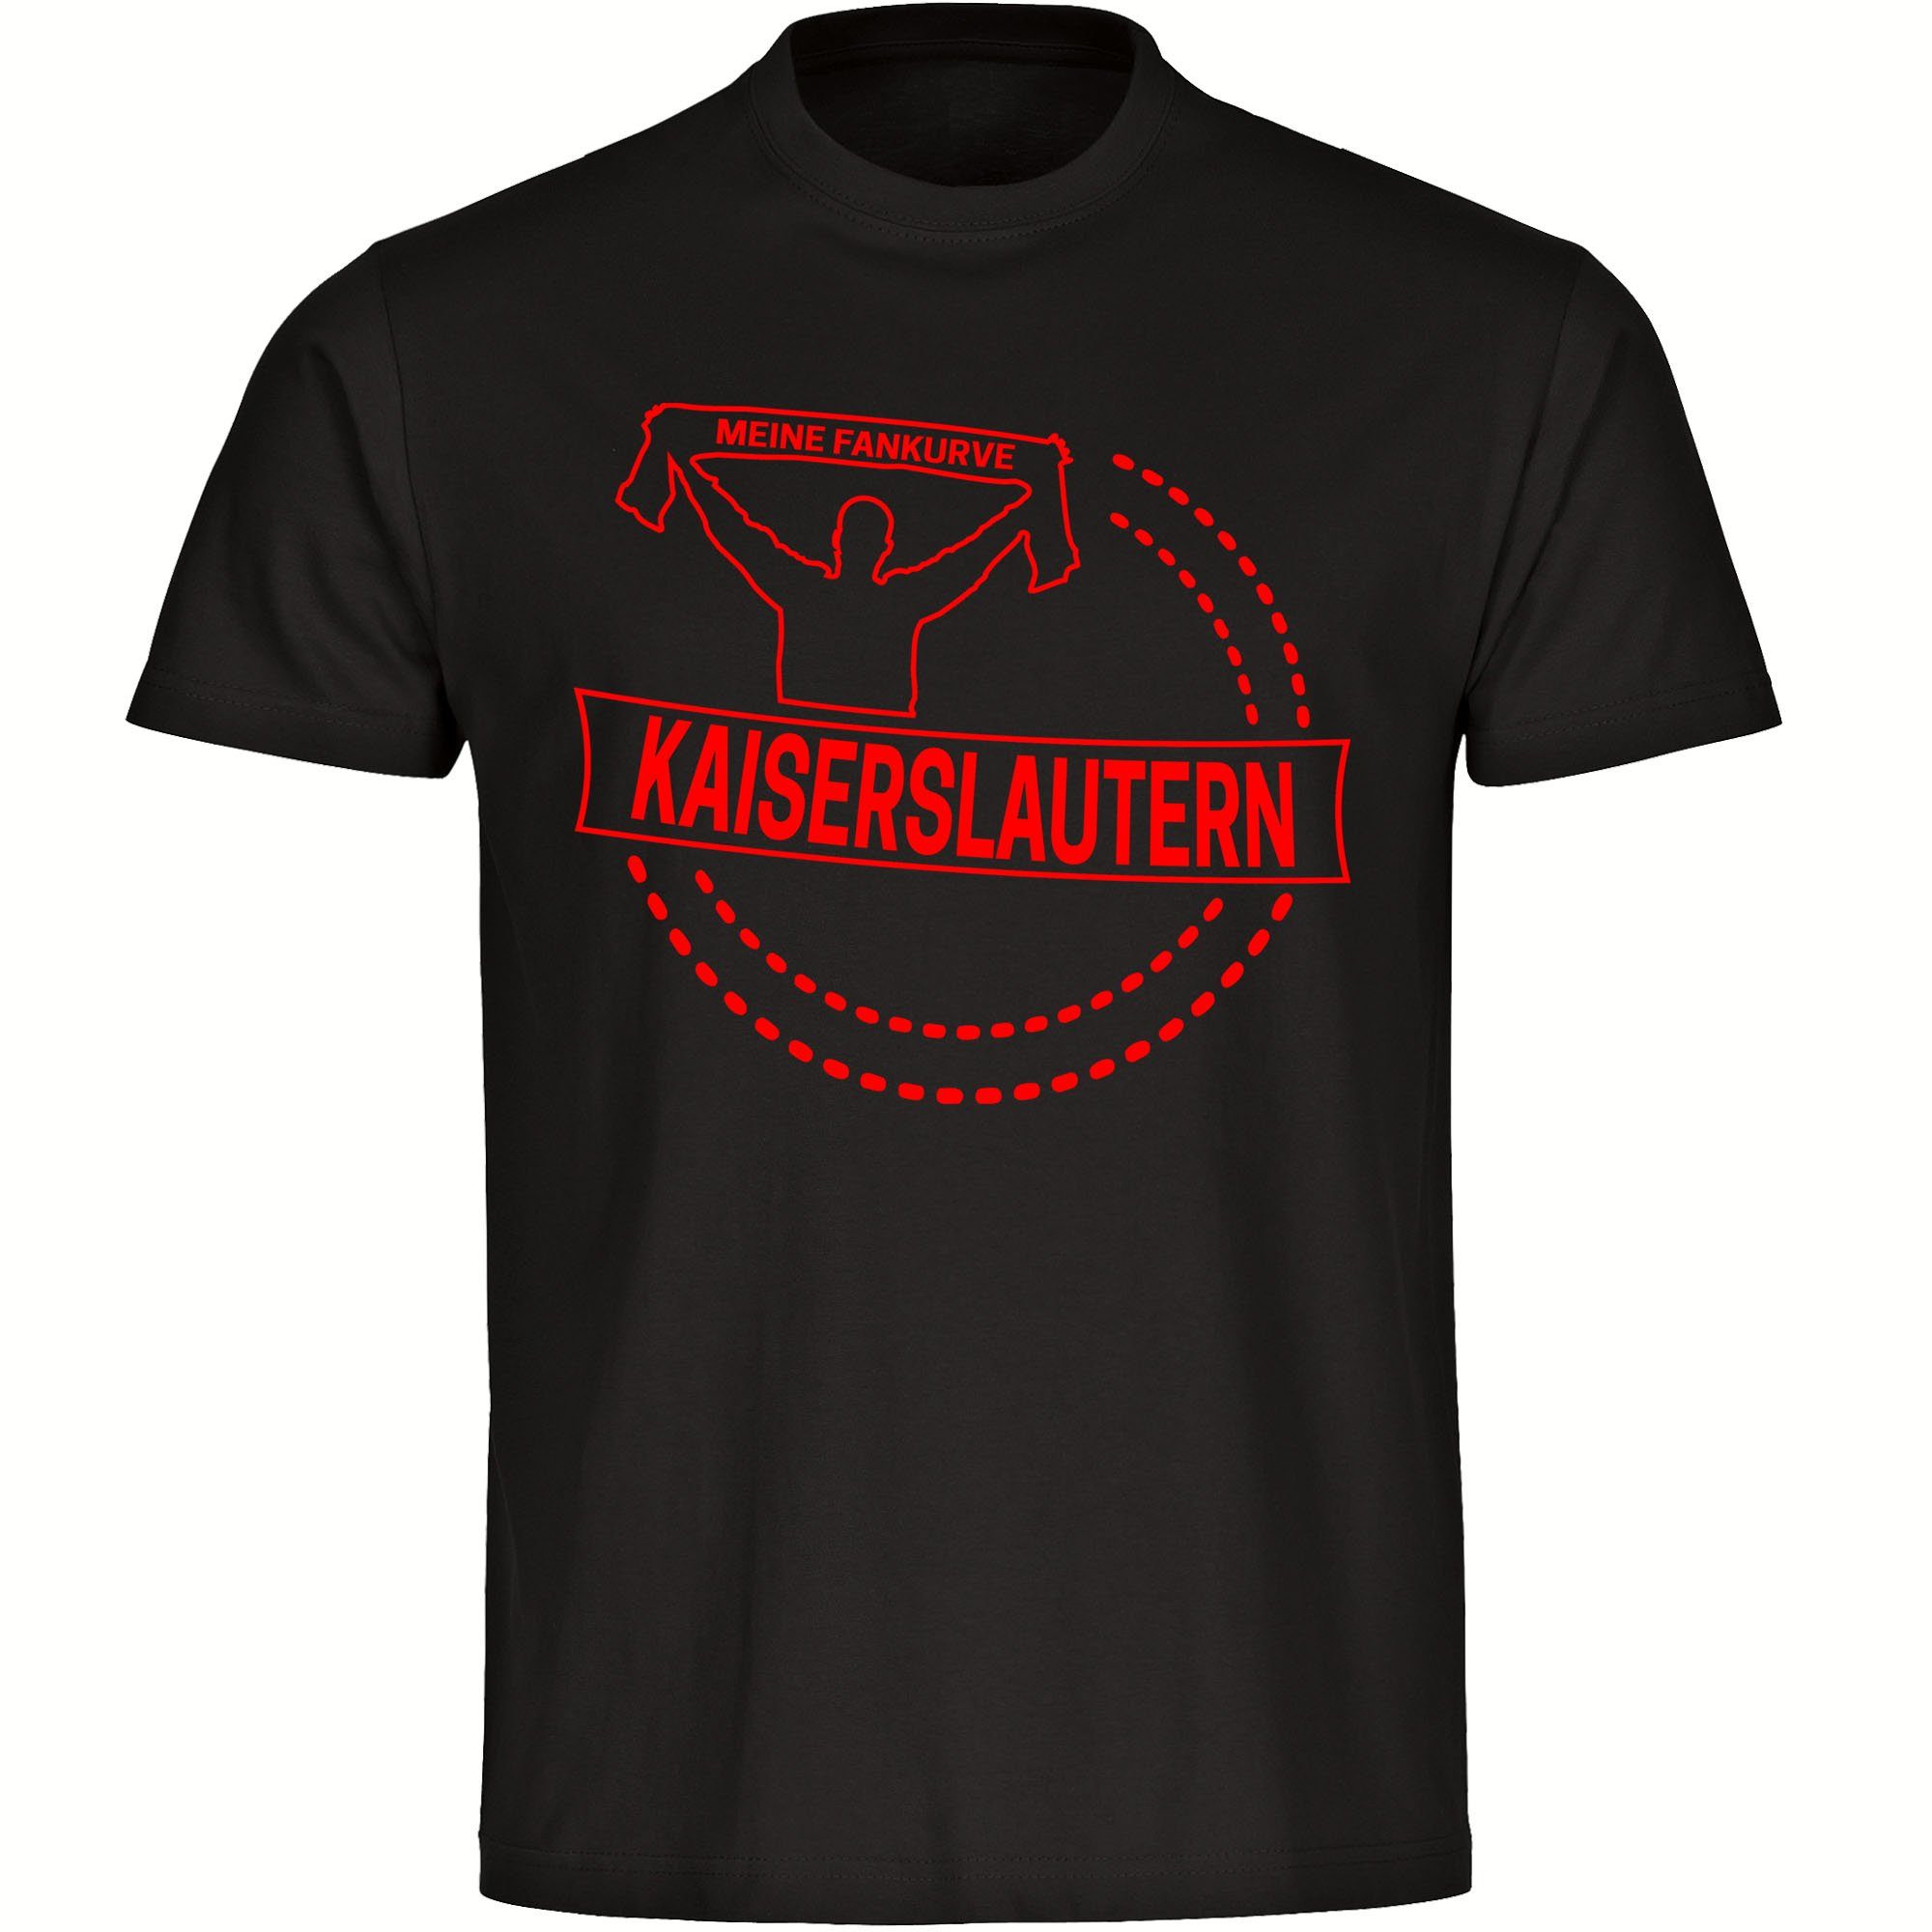 multifanshop T-Shirt Herren Kaiserslautern - Meine Fankurve - Männer